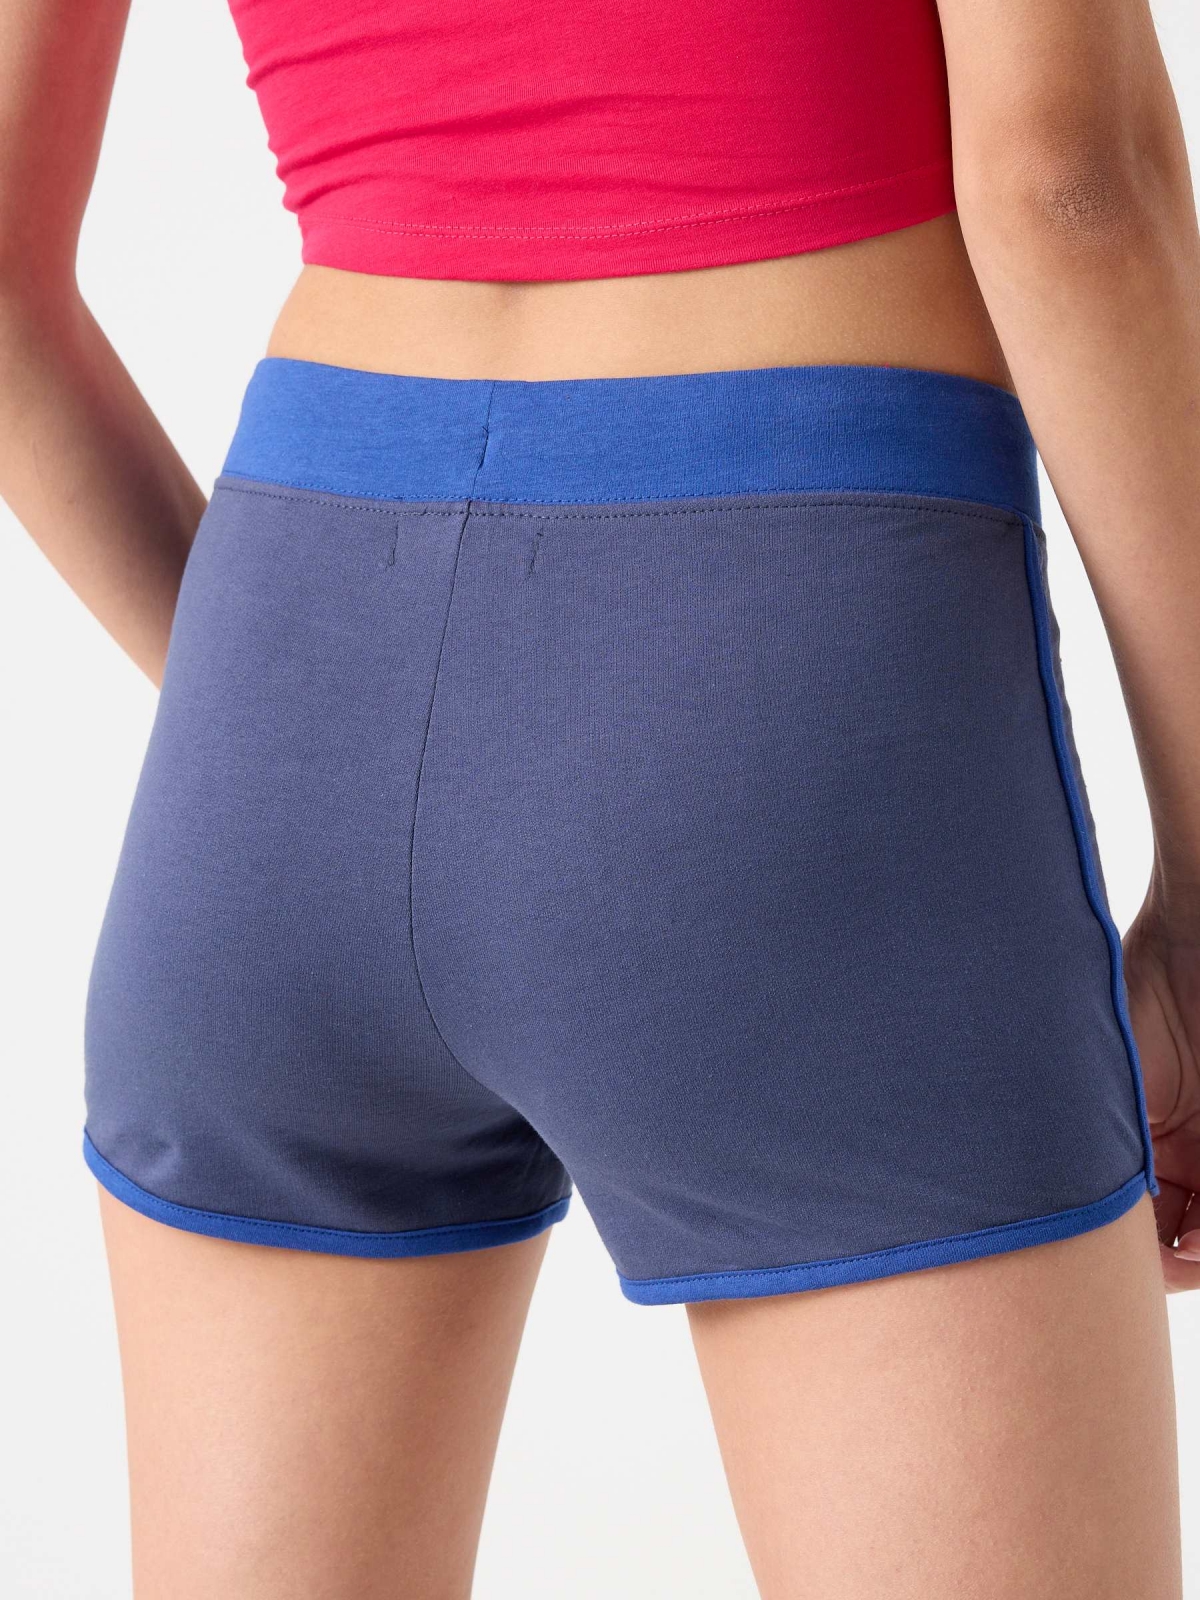 Adjustable waist printed shorts navy detail view